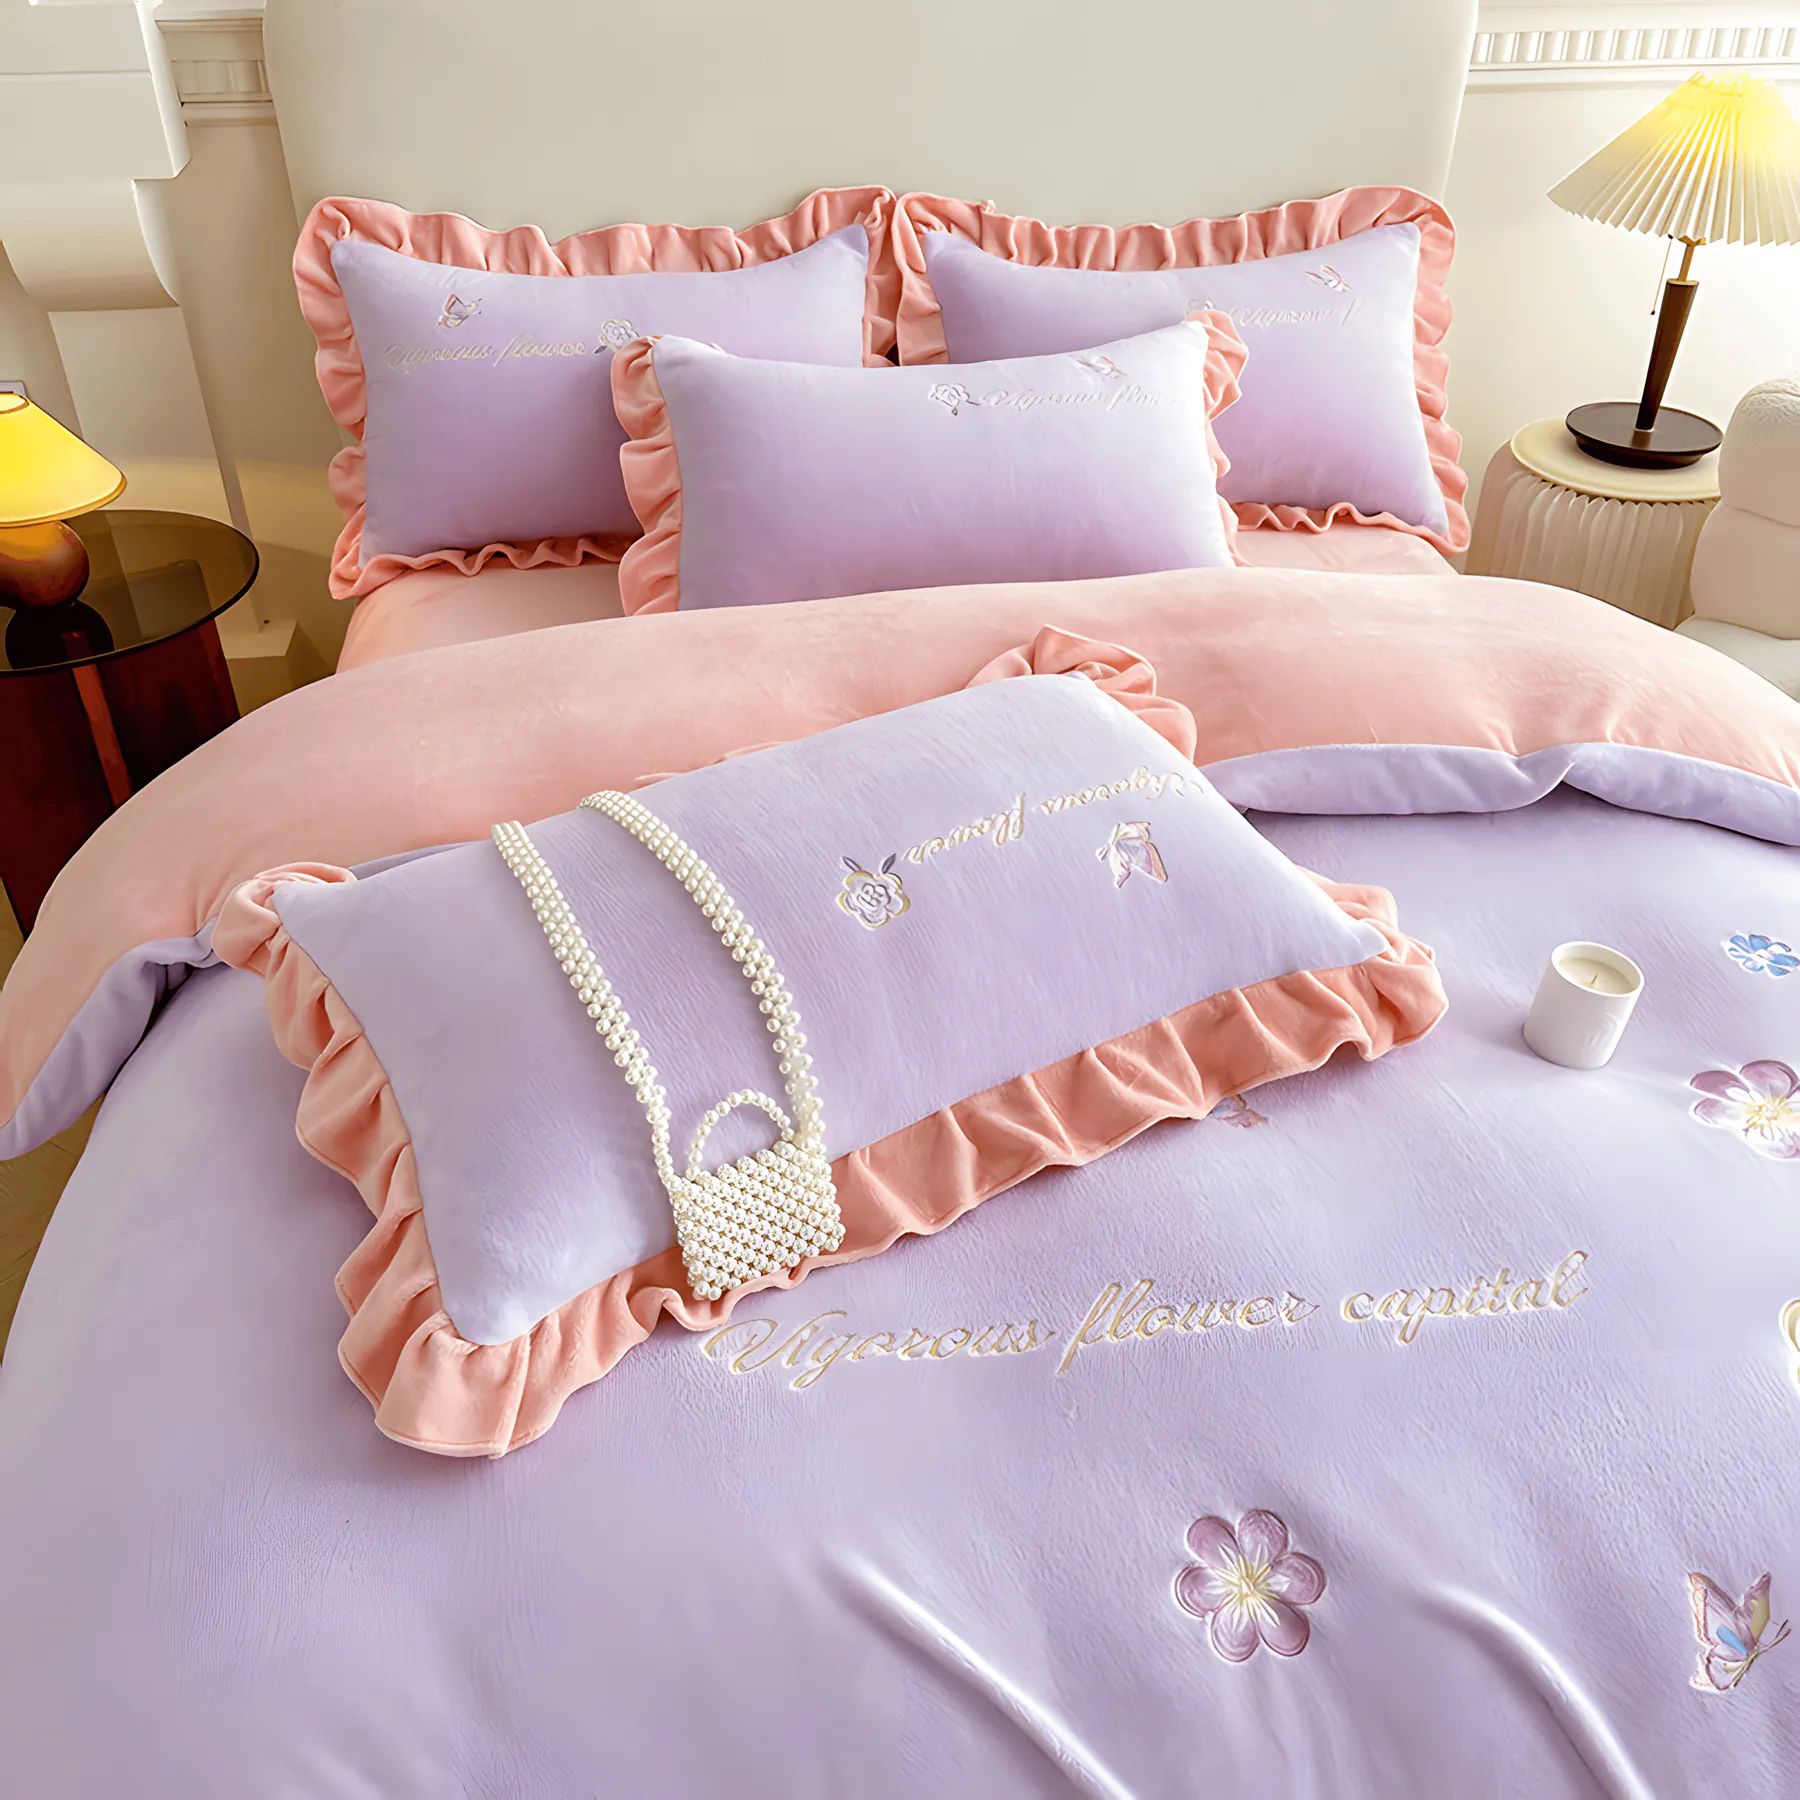 Romantic Milk Fiber Comforter Cover Bed Sheet Pillowcases 4 Pcs Set04